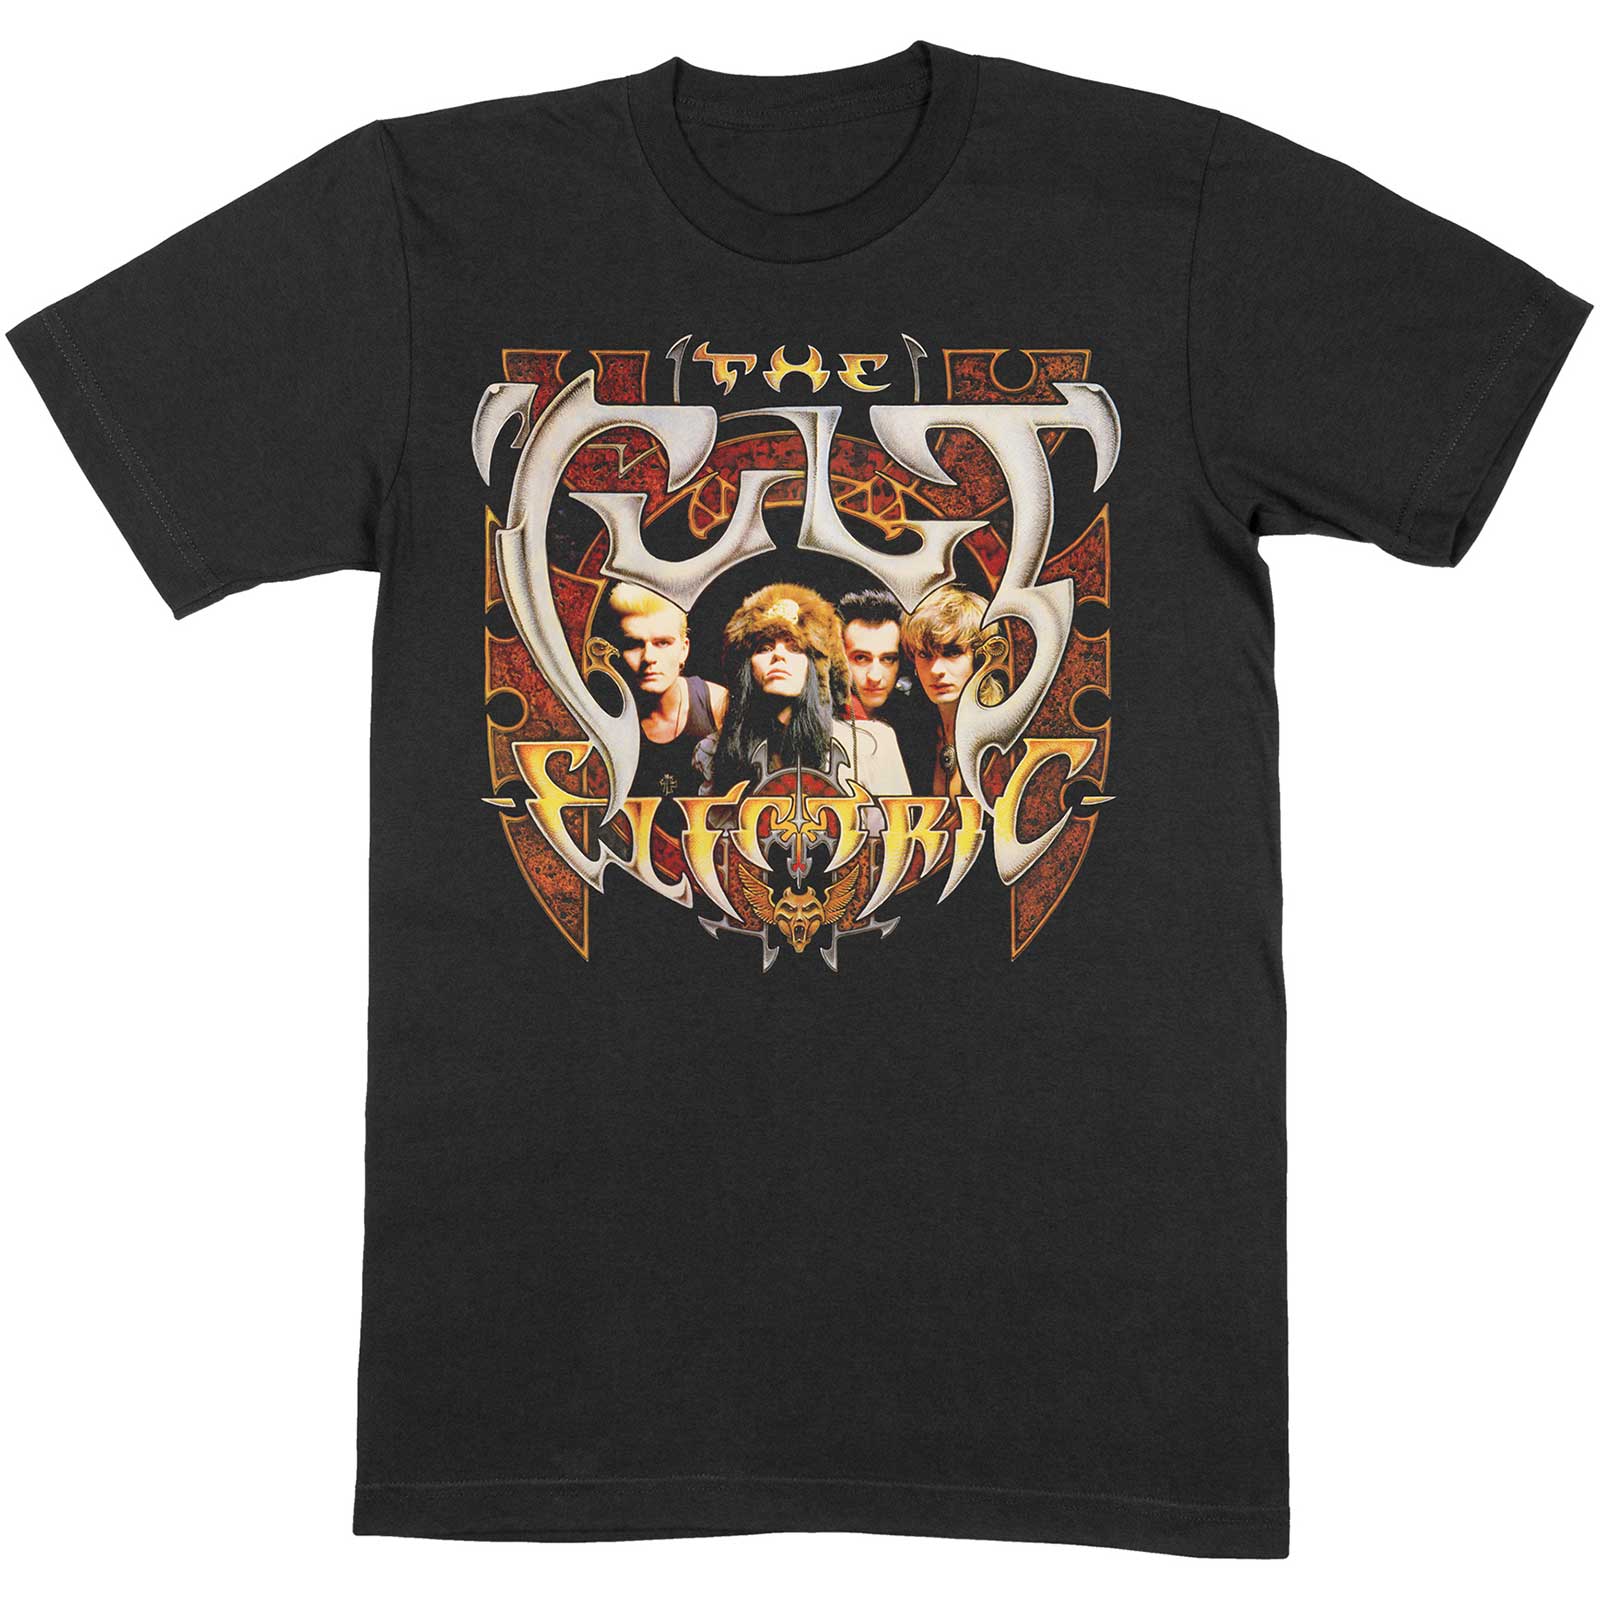 The Cult T-Shirt - Electric Album Cover (Unisex)